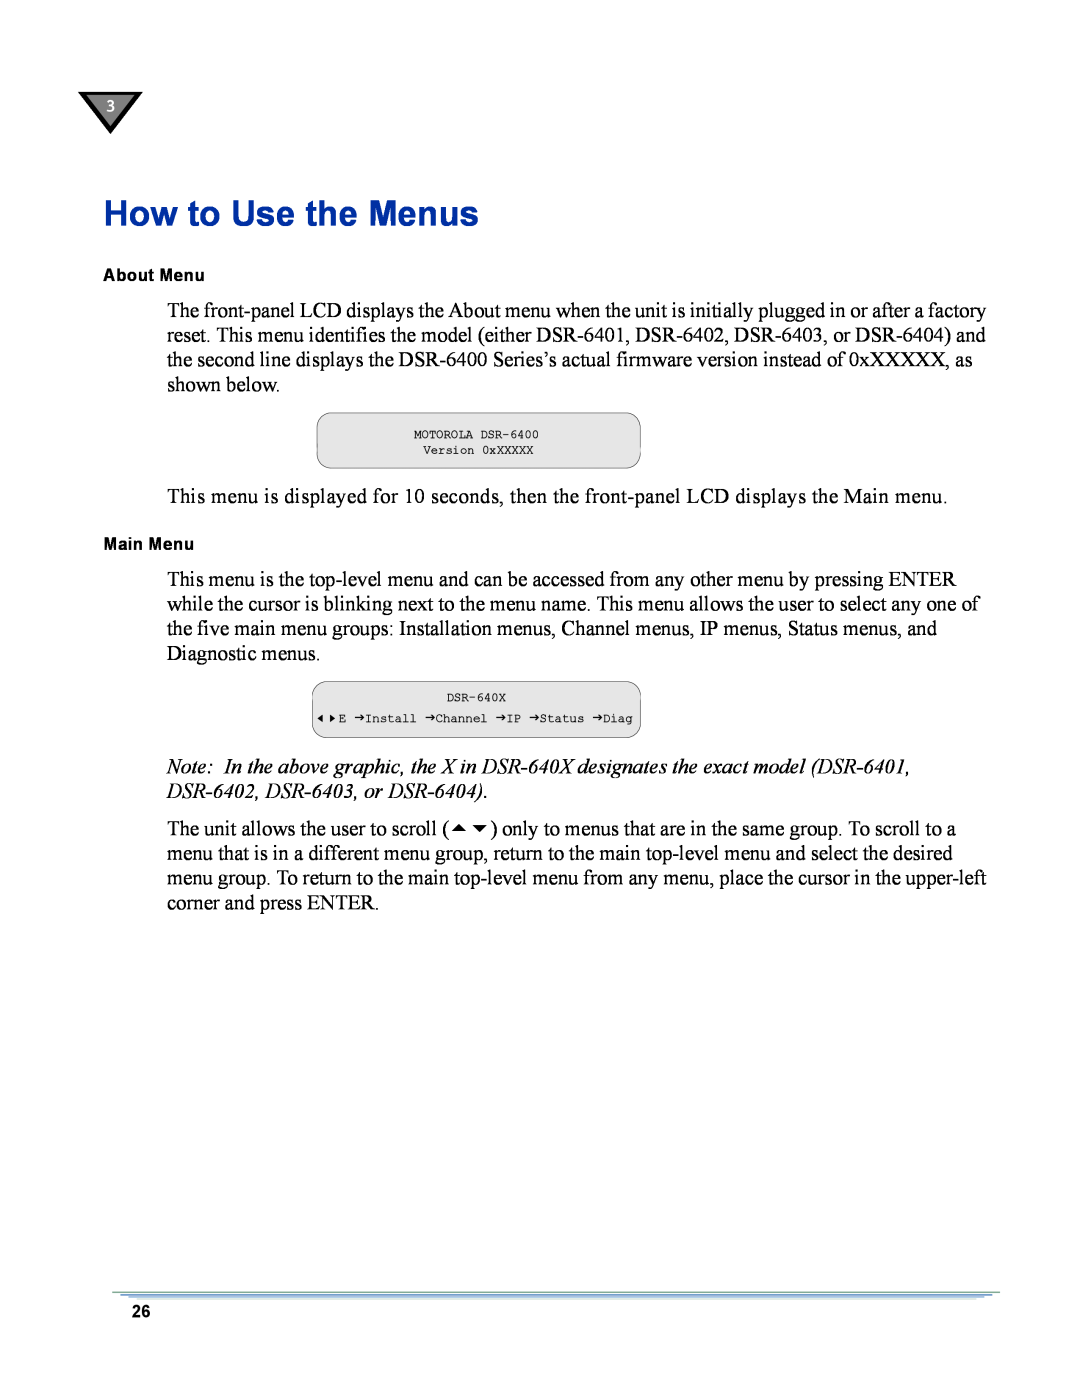 Motorola DSR-6400 manual How to Use the Menus, About Menu, Main Menu 